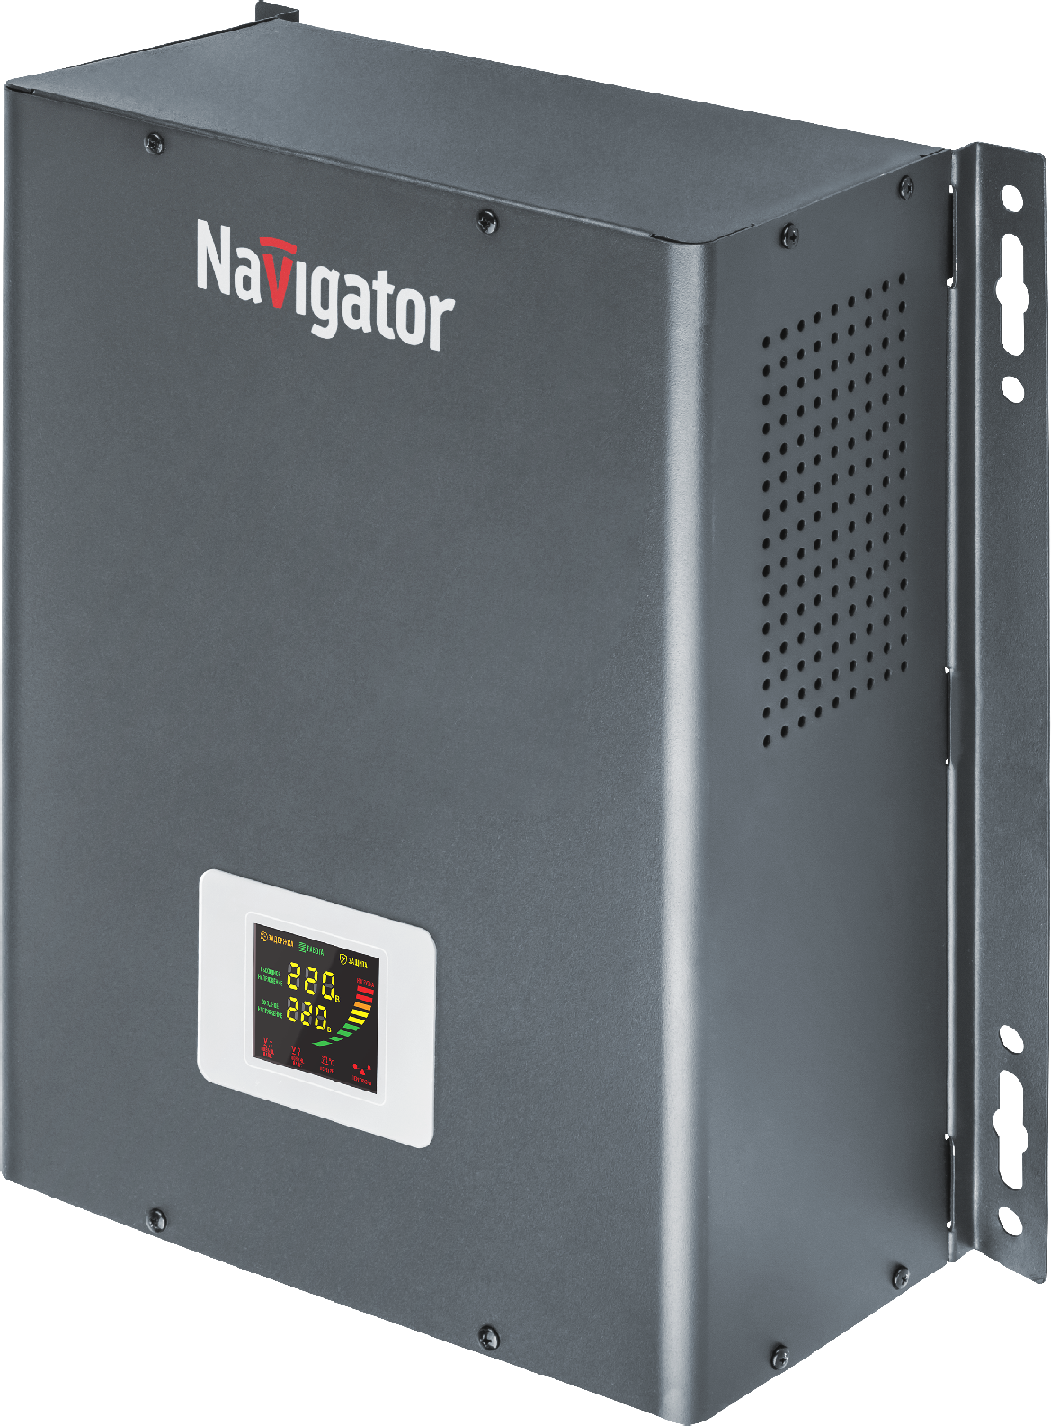 Стабилизатор напряжения настенный Navigator 61 779 NVR-RW1-5000, 5000ВА стабилизатор пониженного напряжения rexant rex fr 1000 11 5021